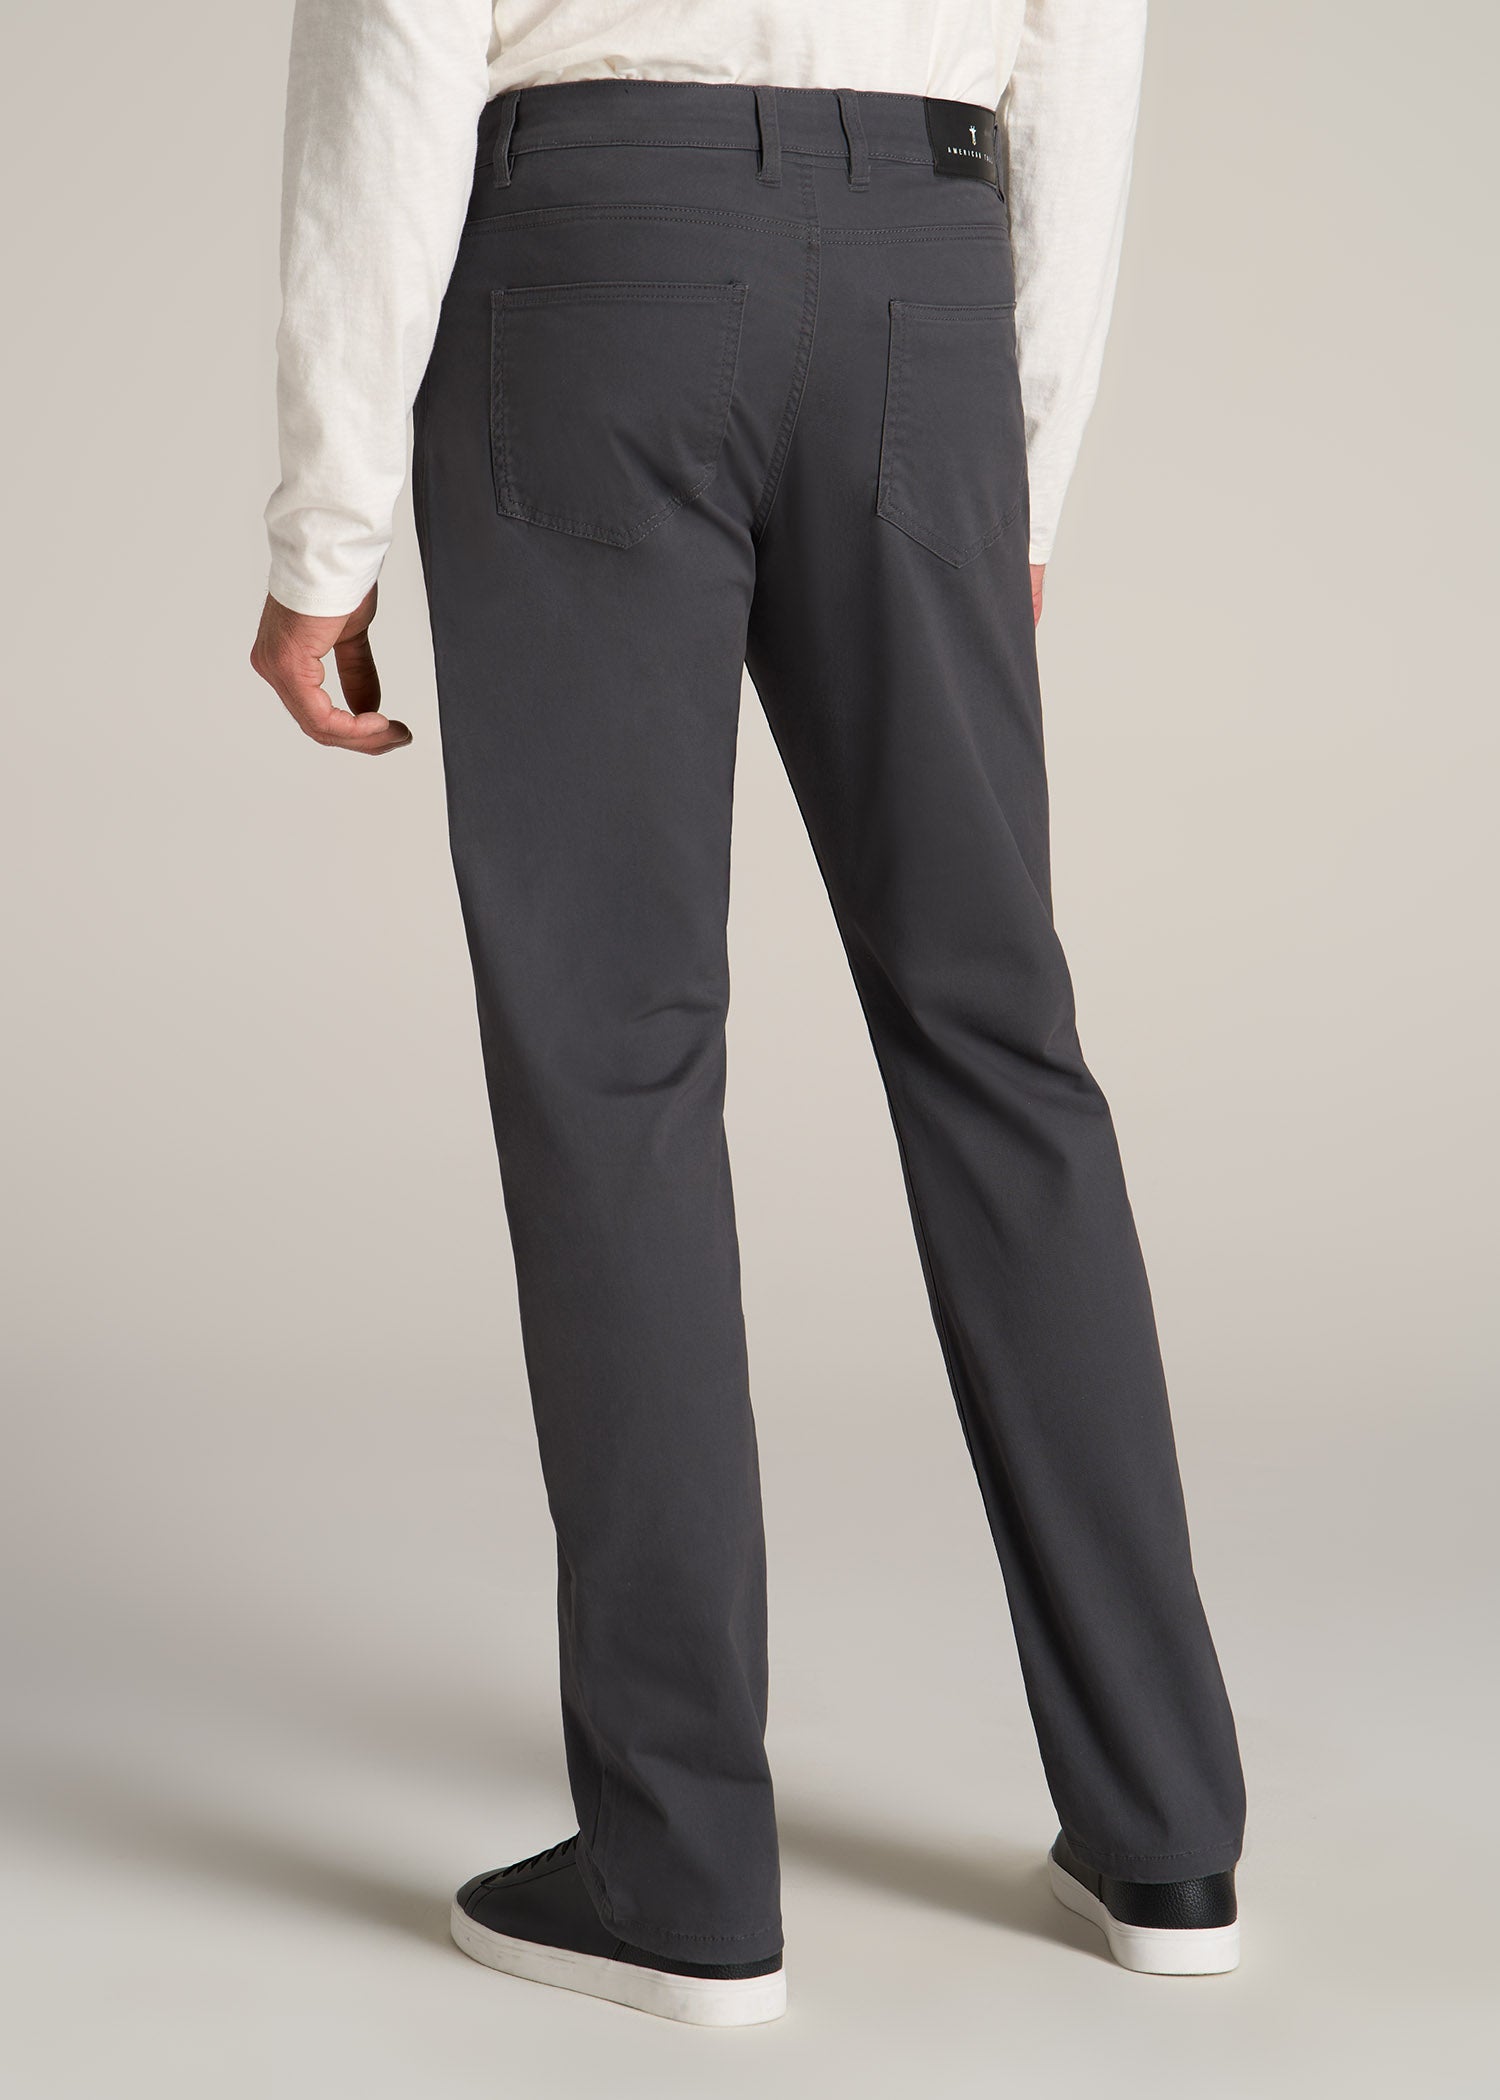 J1 Straight Leg Five Pocket Khaki Pants For Tall Men | American Tall